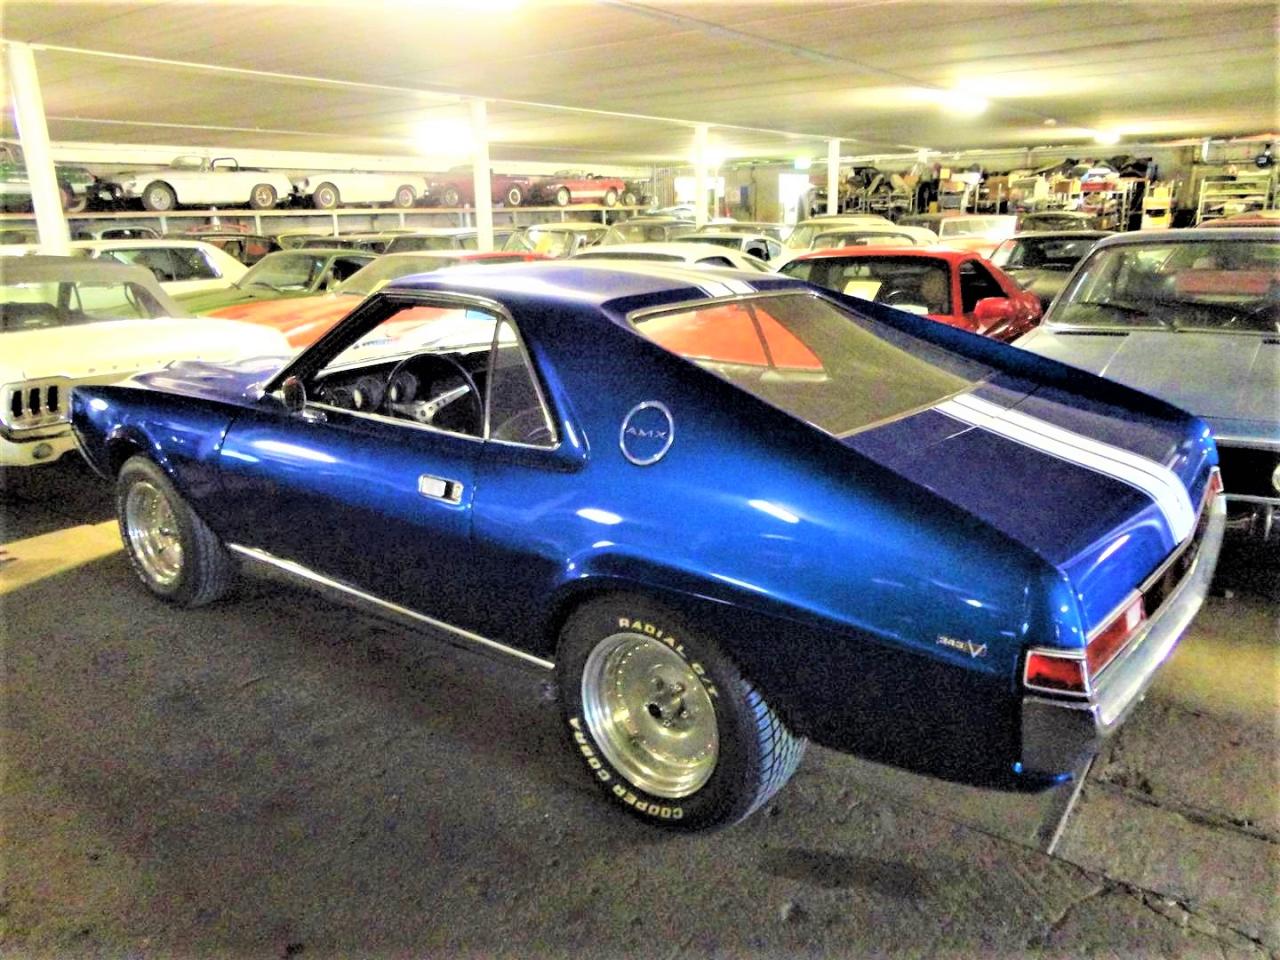 1969 AMX Fastback coupe blue